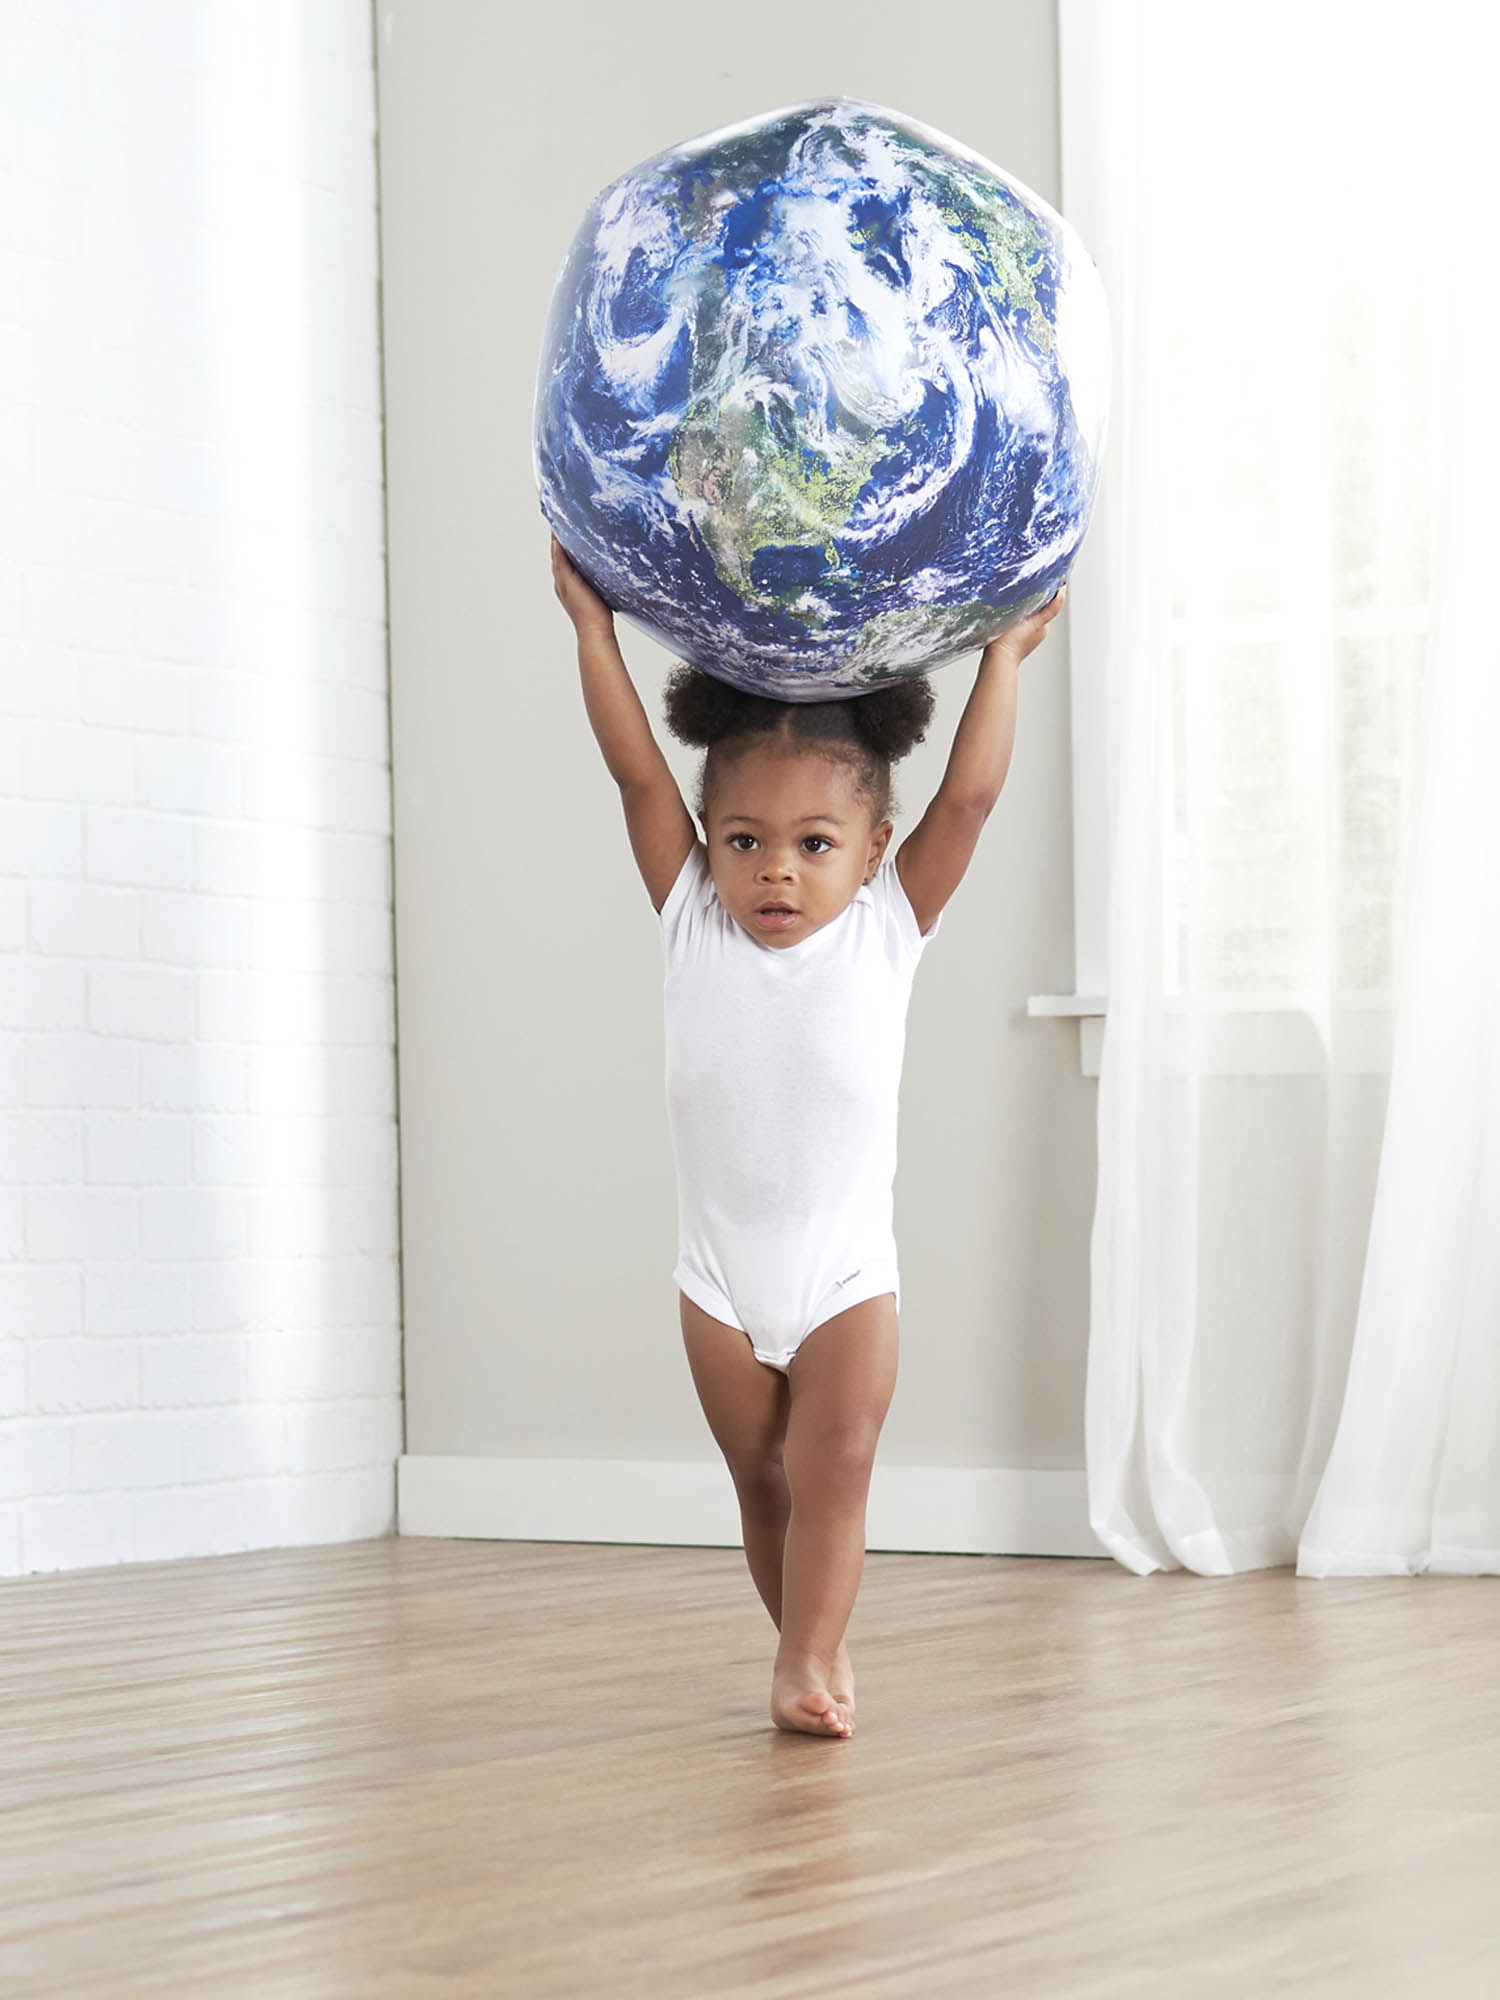 Gerber Baby Unisex White Short Sleeve Cotton Onesies Bodysuits, 8-Pack, Preemie-24 Months - image 5 of 13